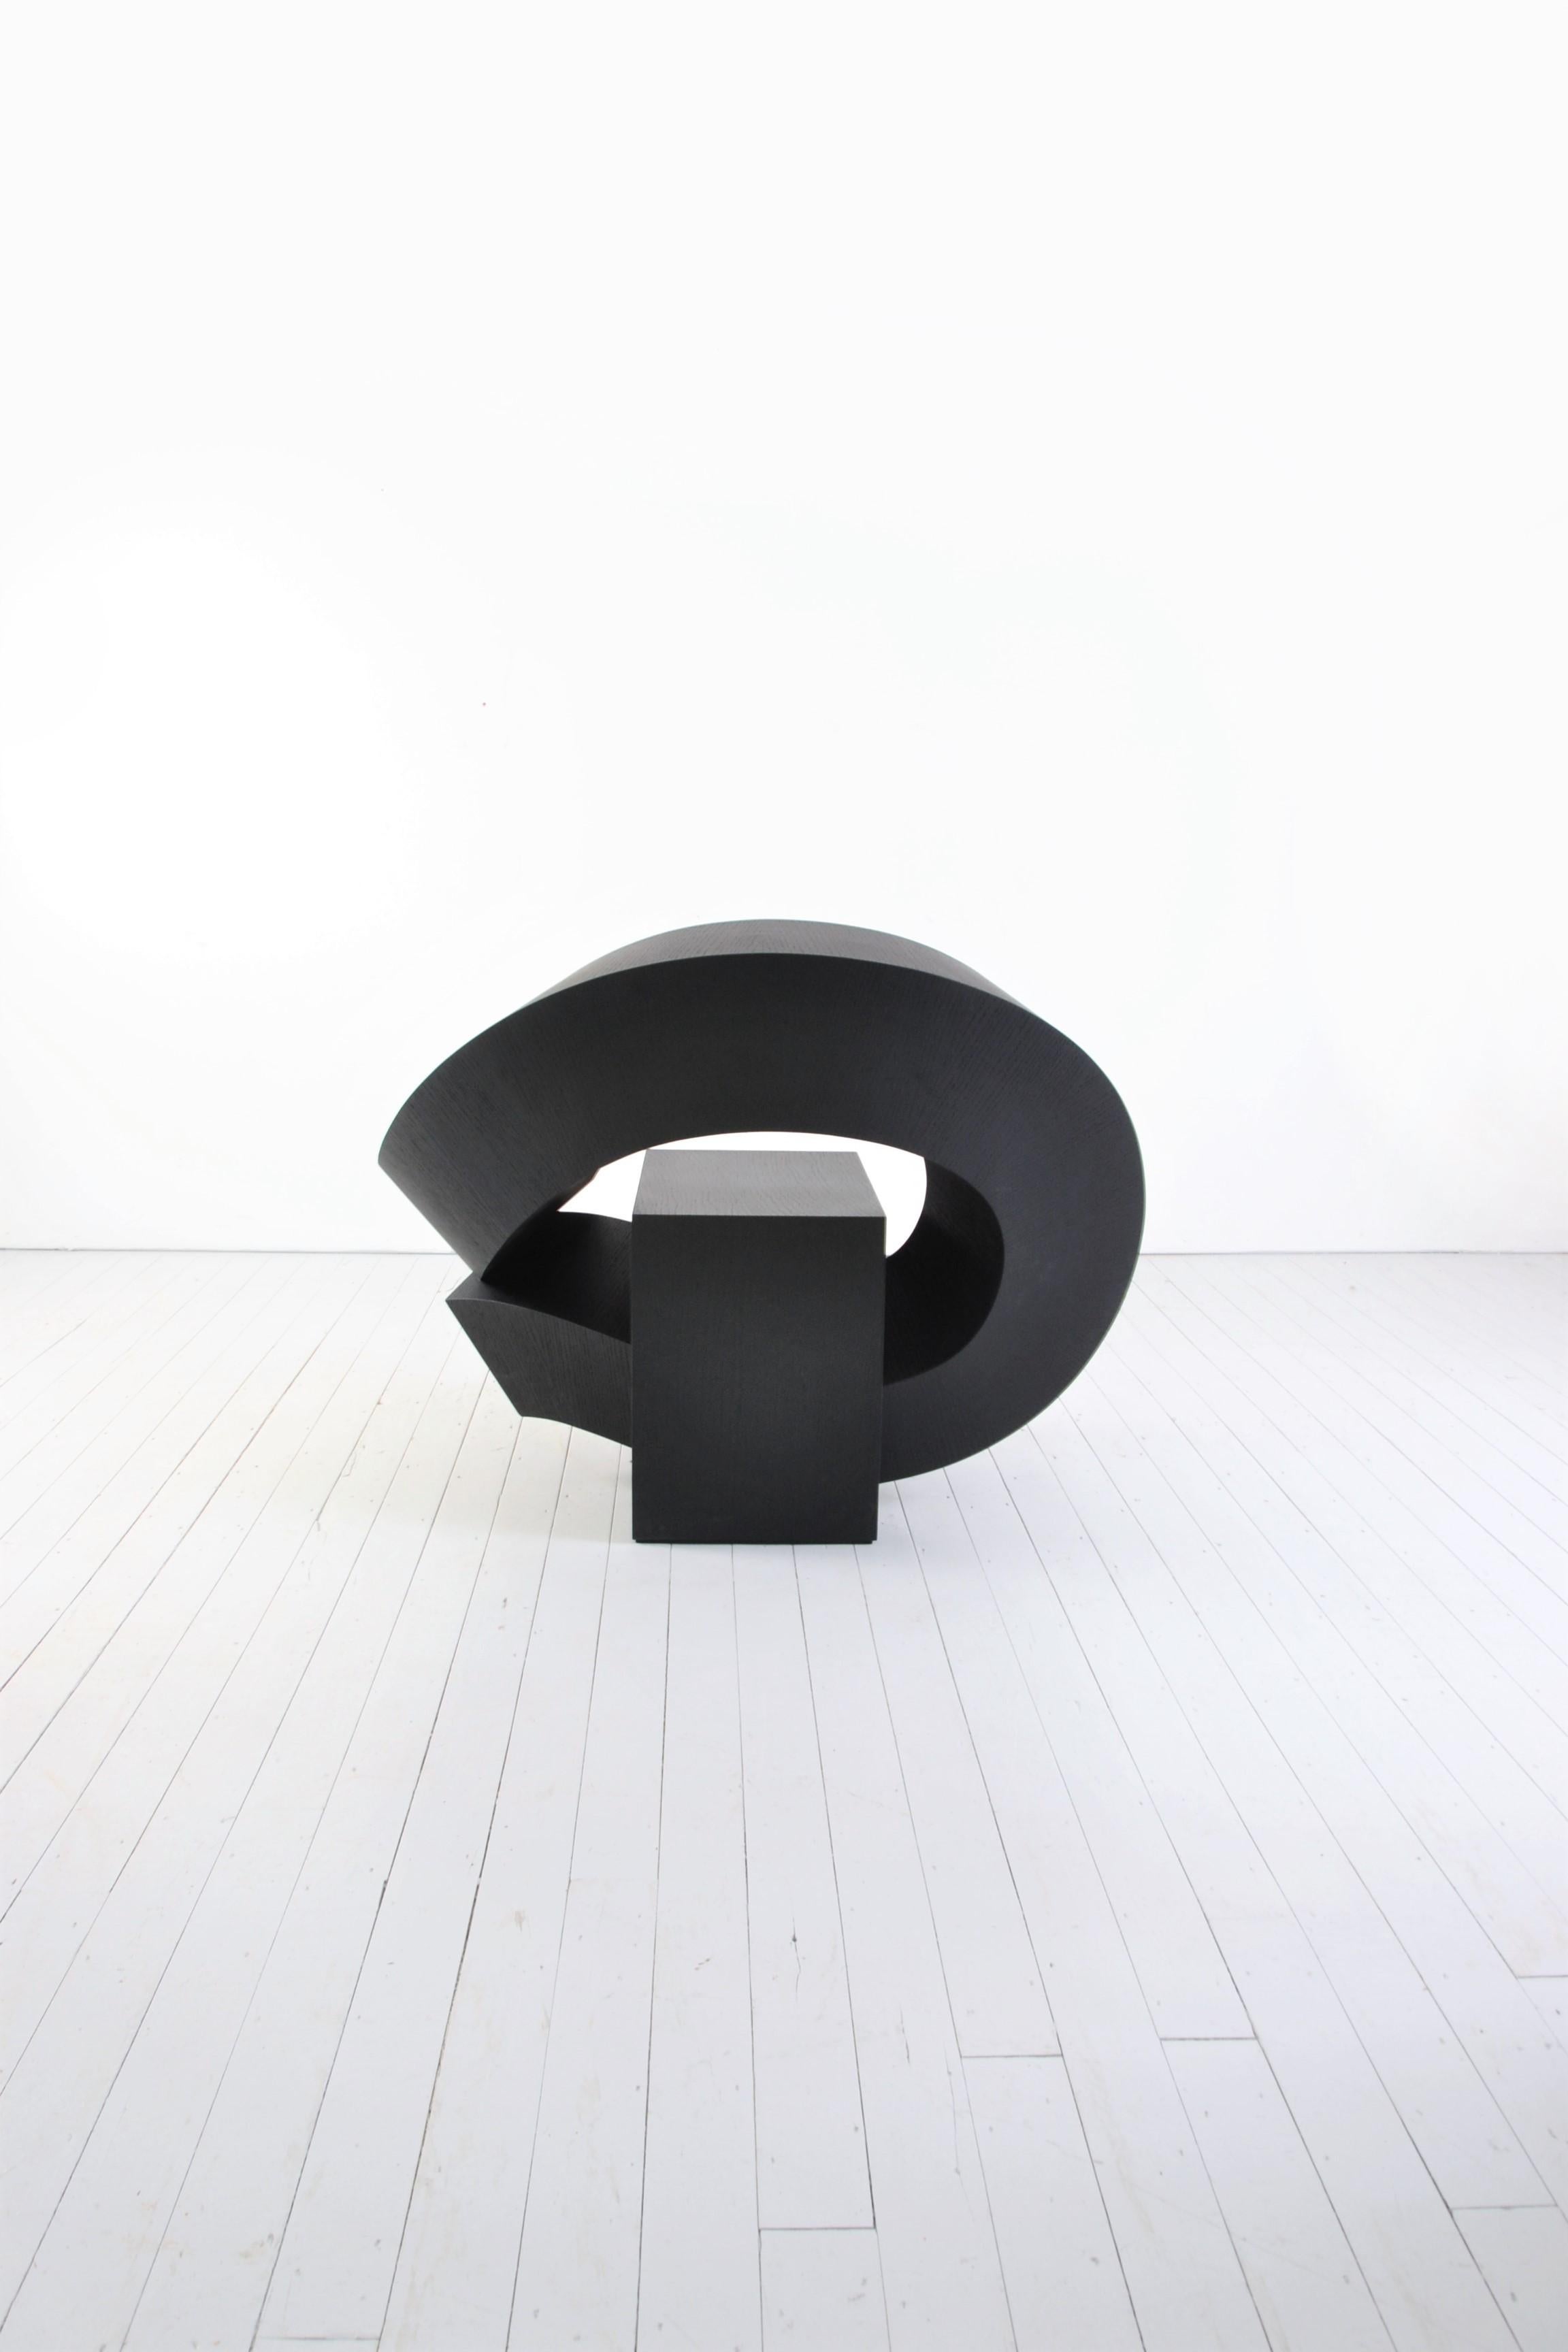 South Asian Chulan Kwak Sculptural Chair, 2021 For Sale